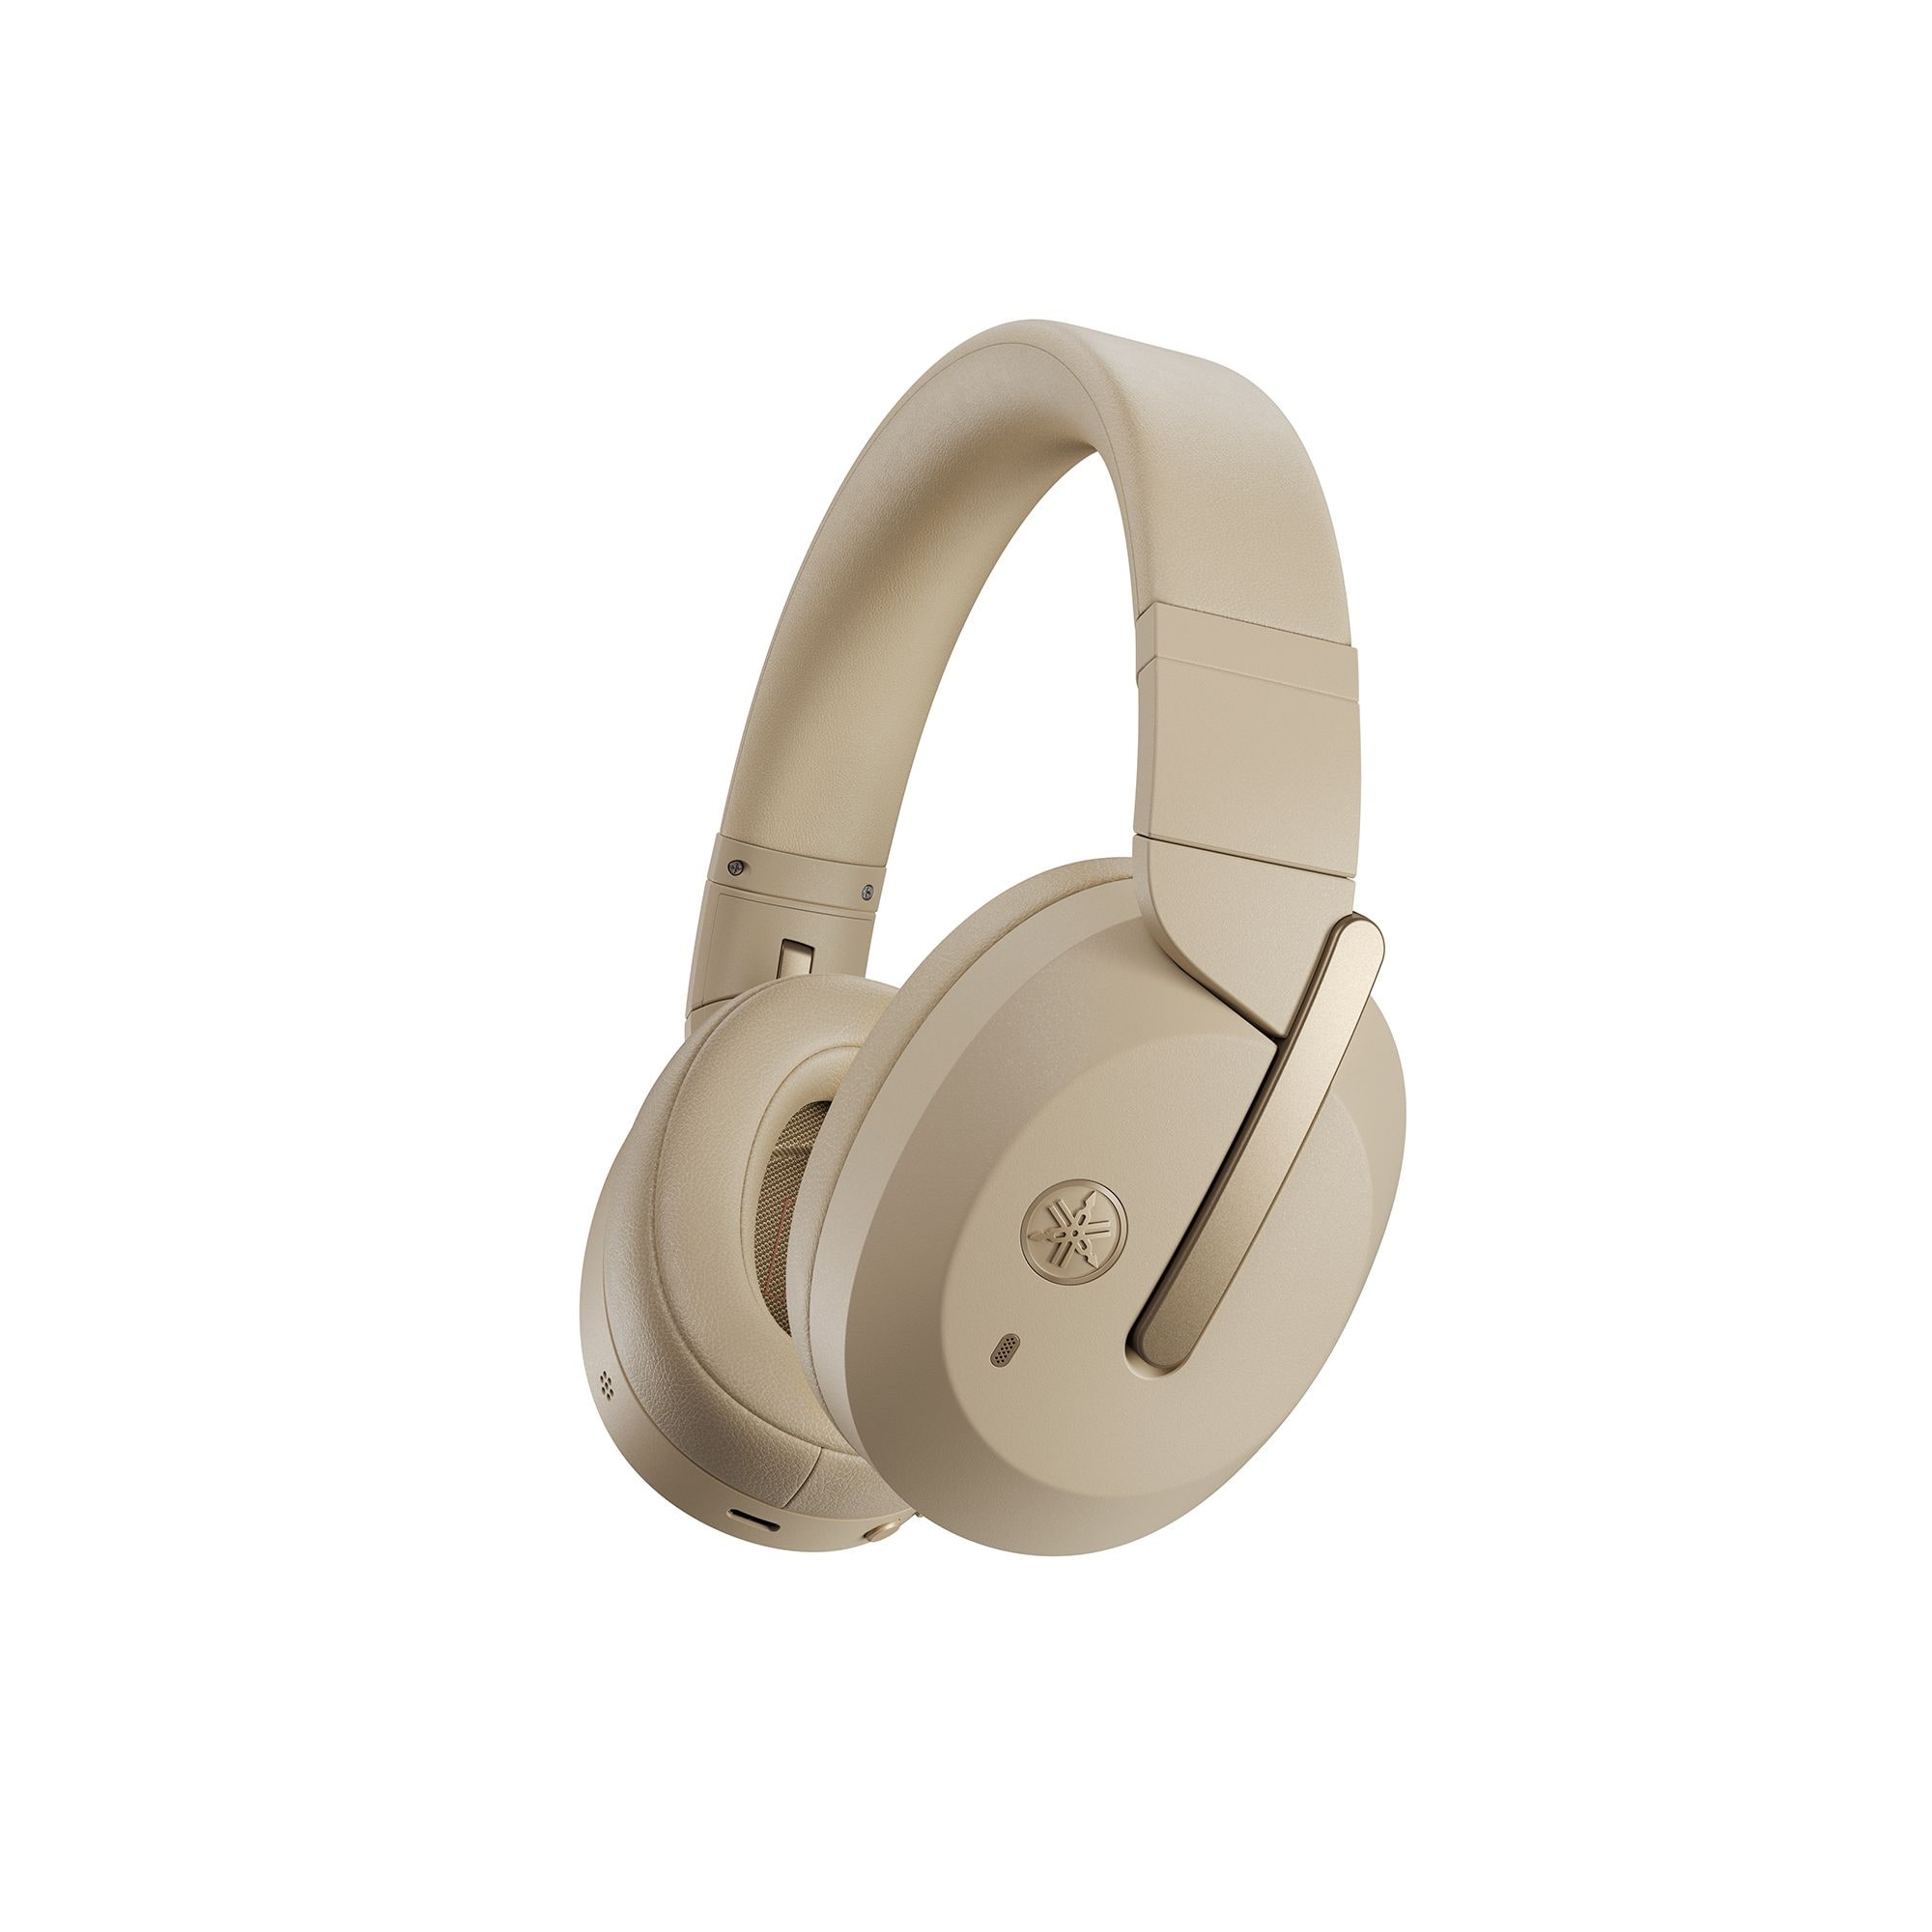 Specs & - - - - Yamaha Audio Products Headphones Visual YH-E700B - USA